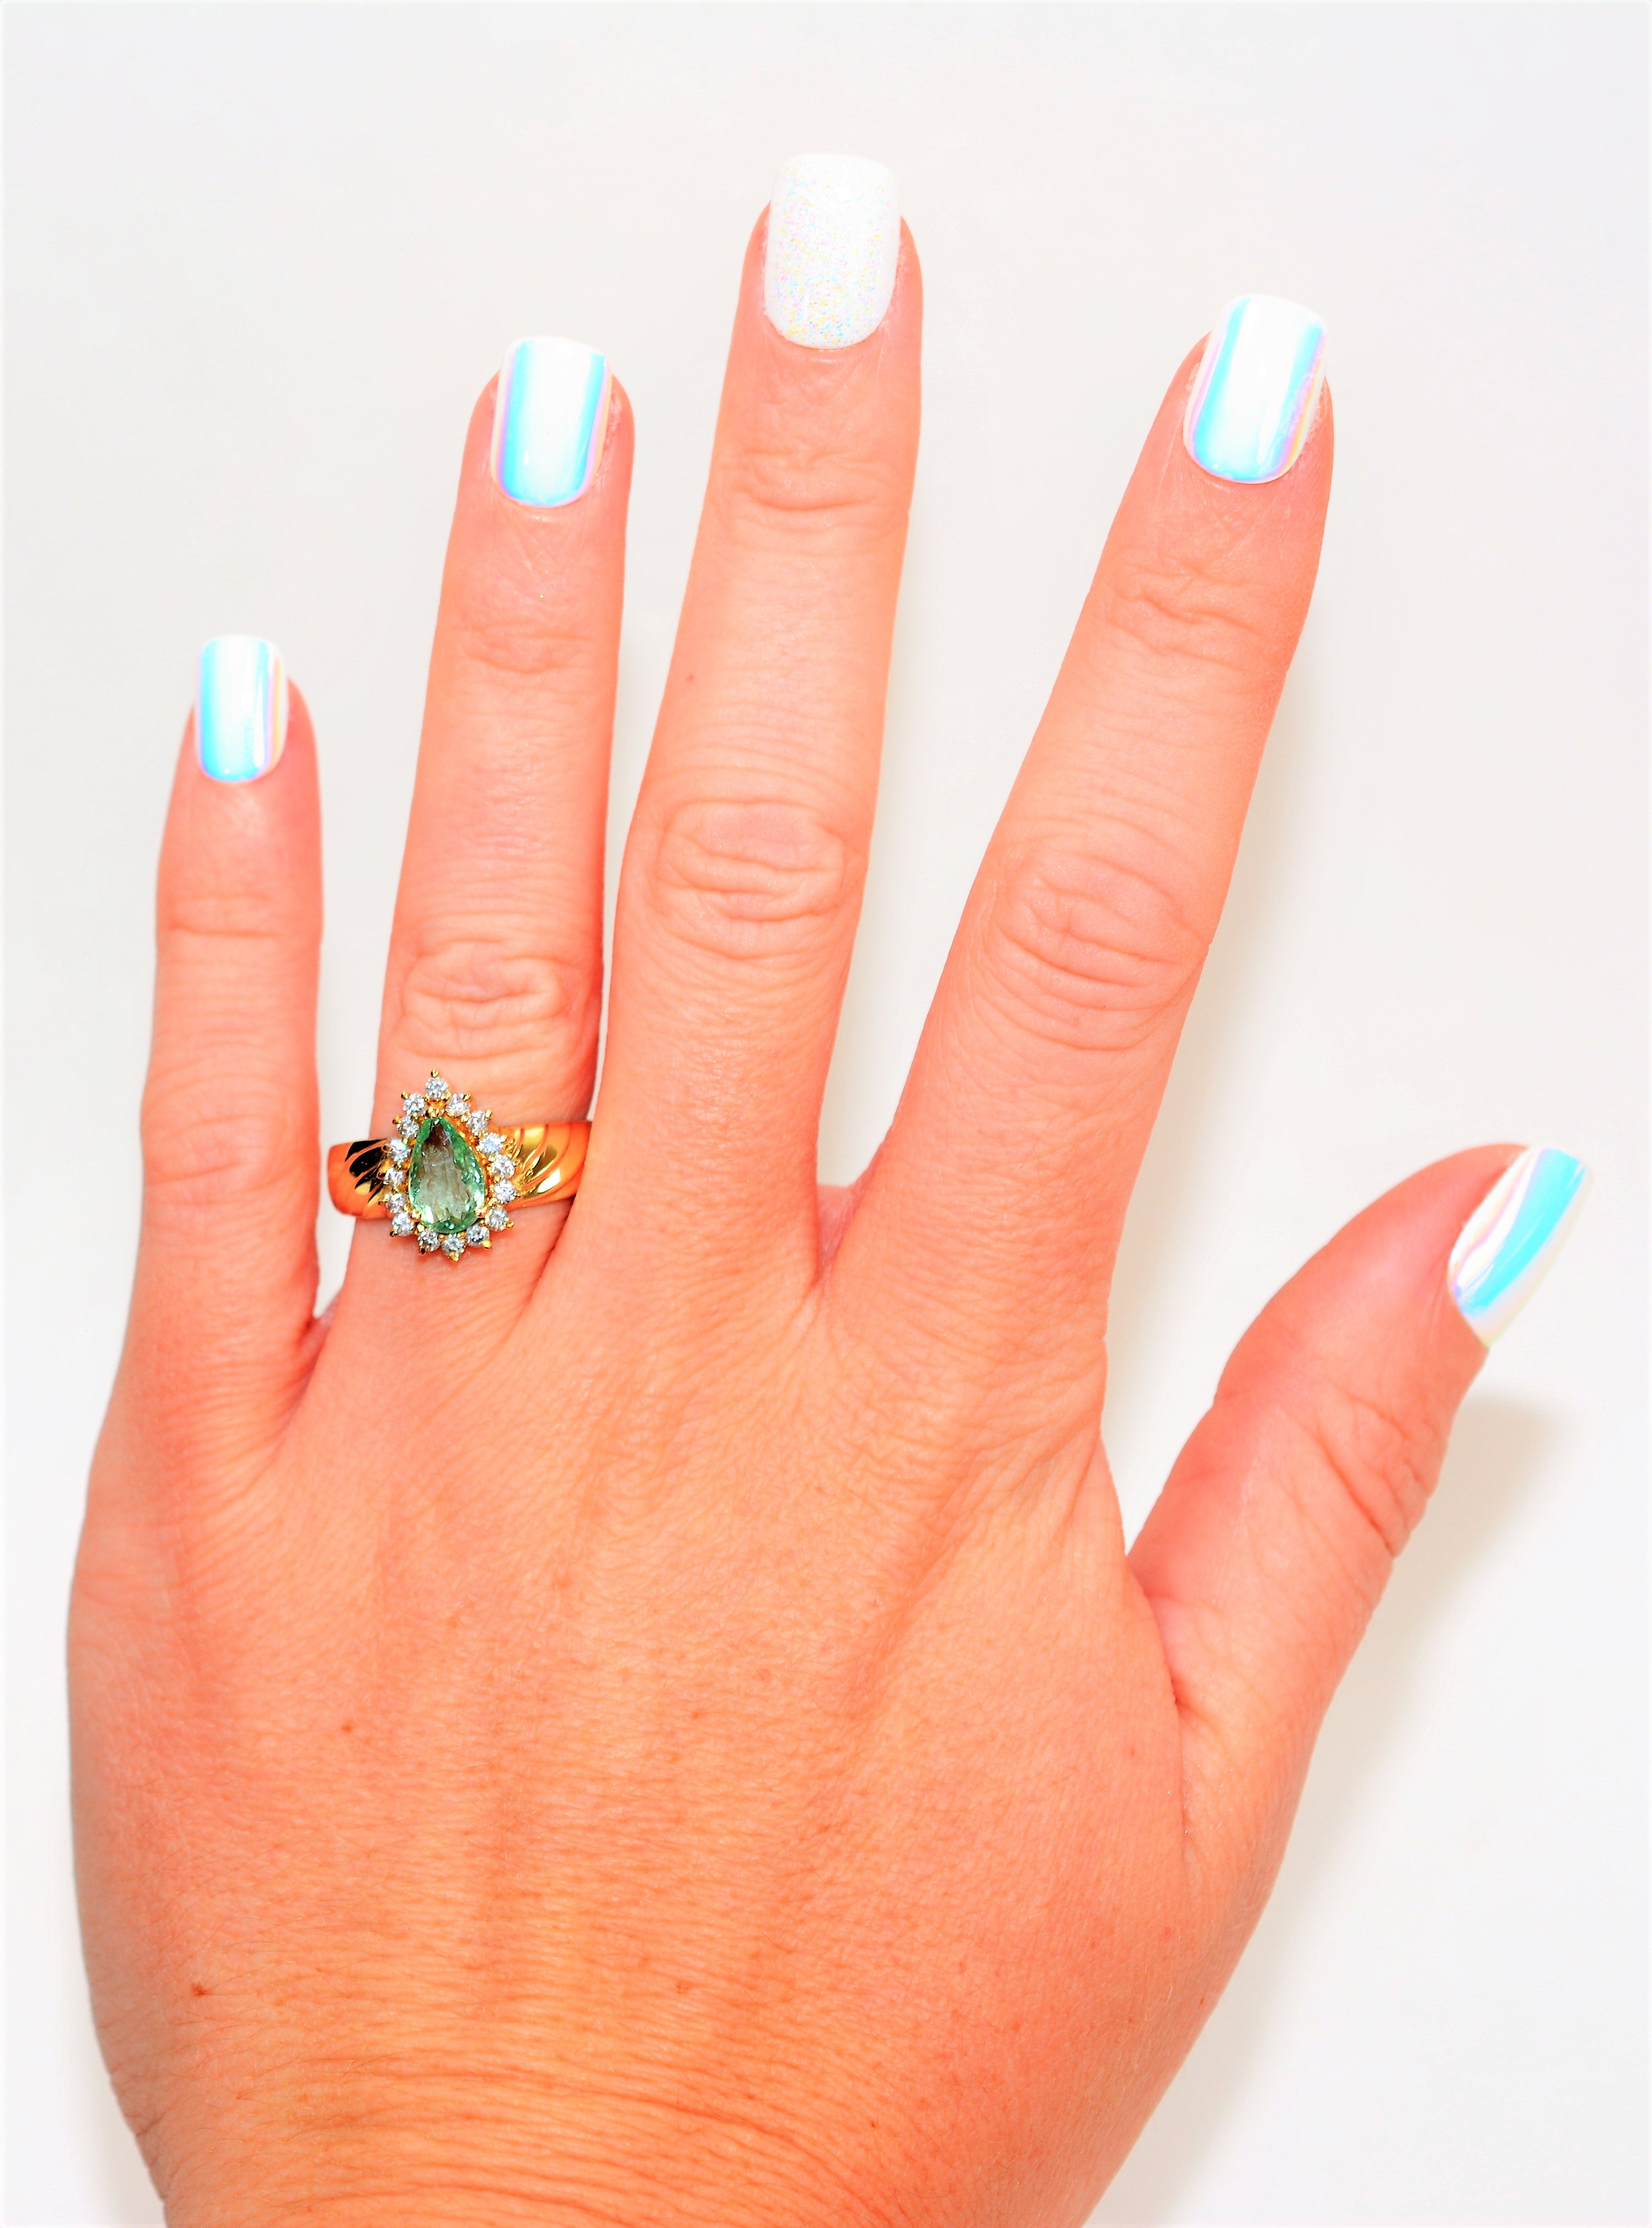 Natural Paraiba Tourmaline & Diamond Ring 18K Solid Gold 1.17tcw Gemstone Jewelry Women's Ring Diamond Halo Fine Jewellery Engagement Ring